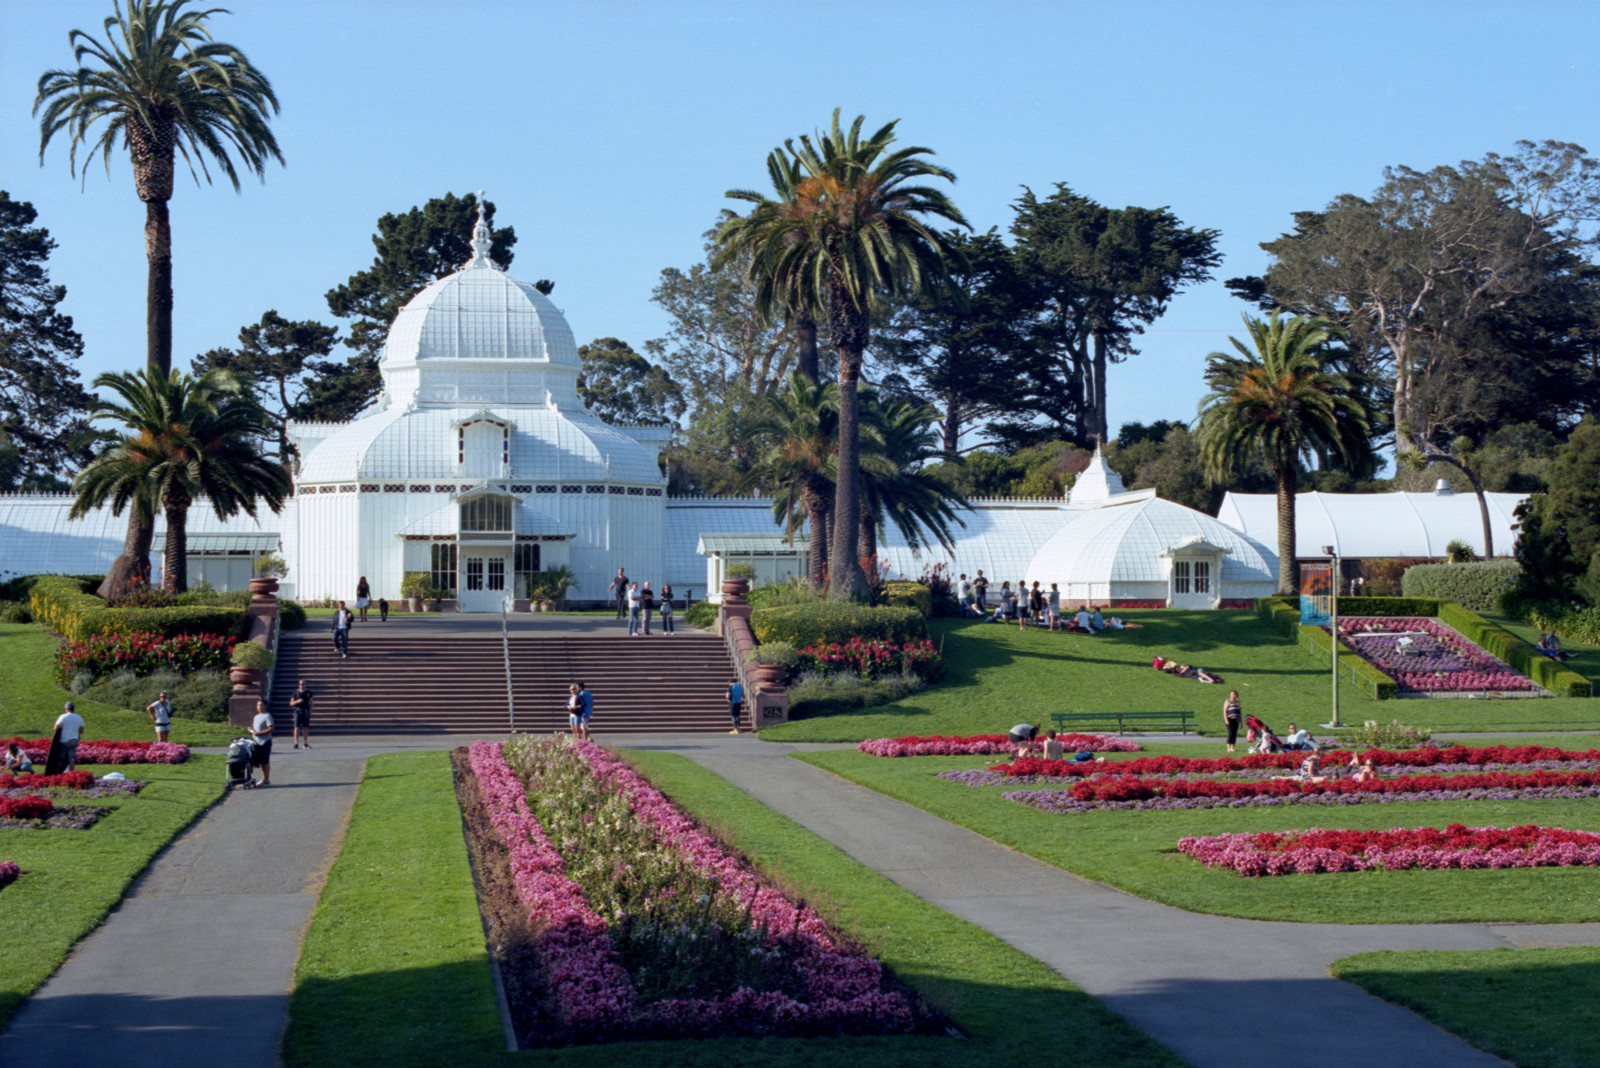 Hall of Flowers, Golden Gate Park.